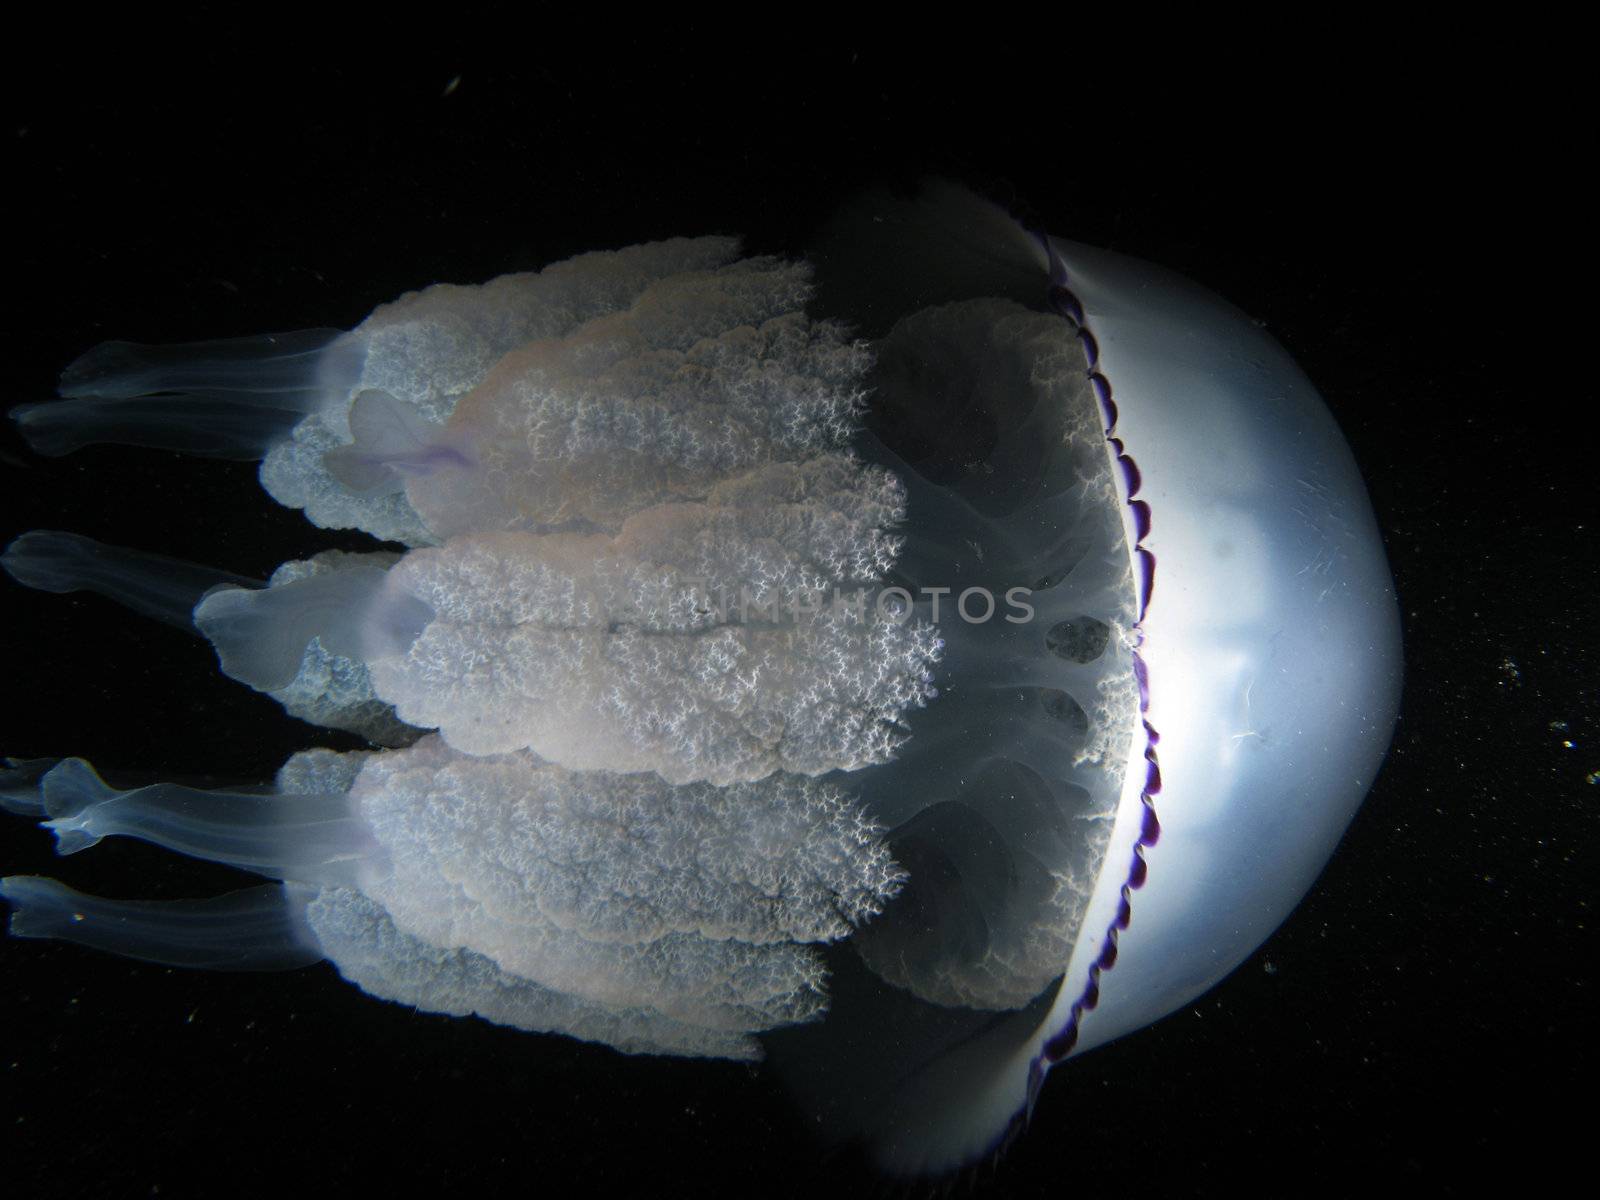 Jellyfish by PlanctonVideo